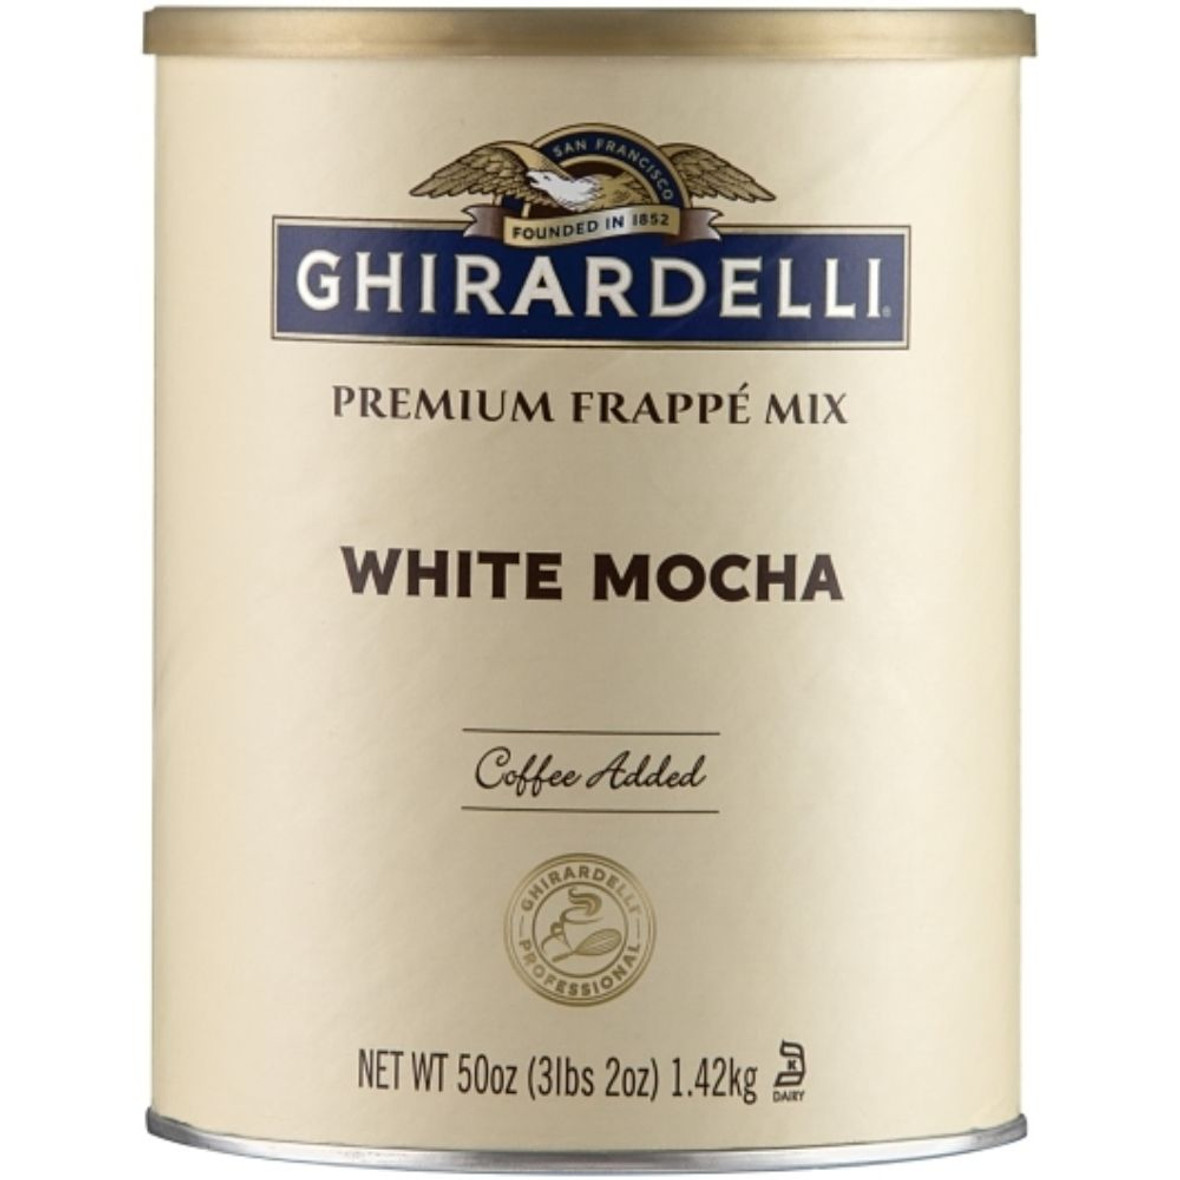 Ghirardelli White Mocha Frappe